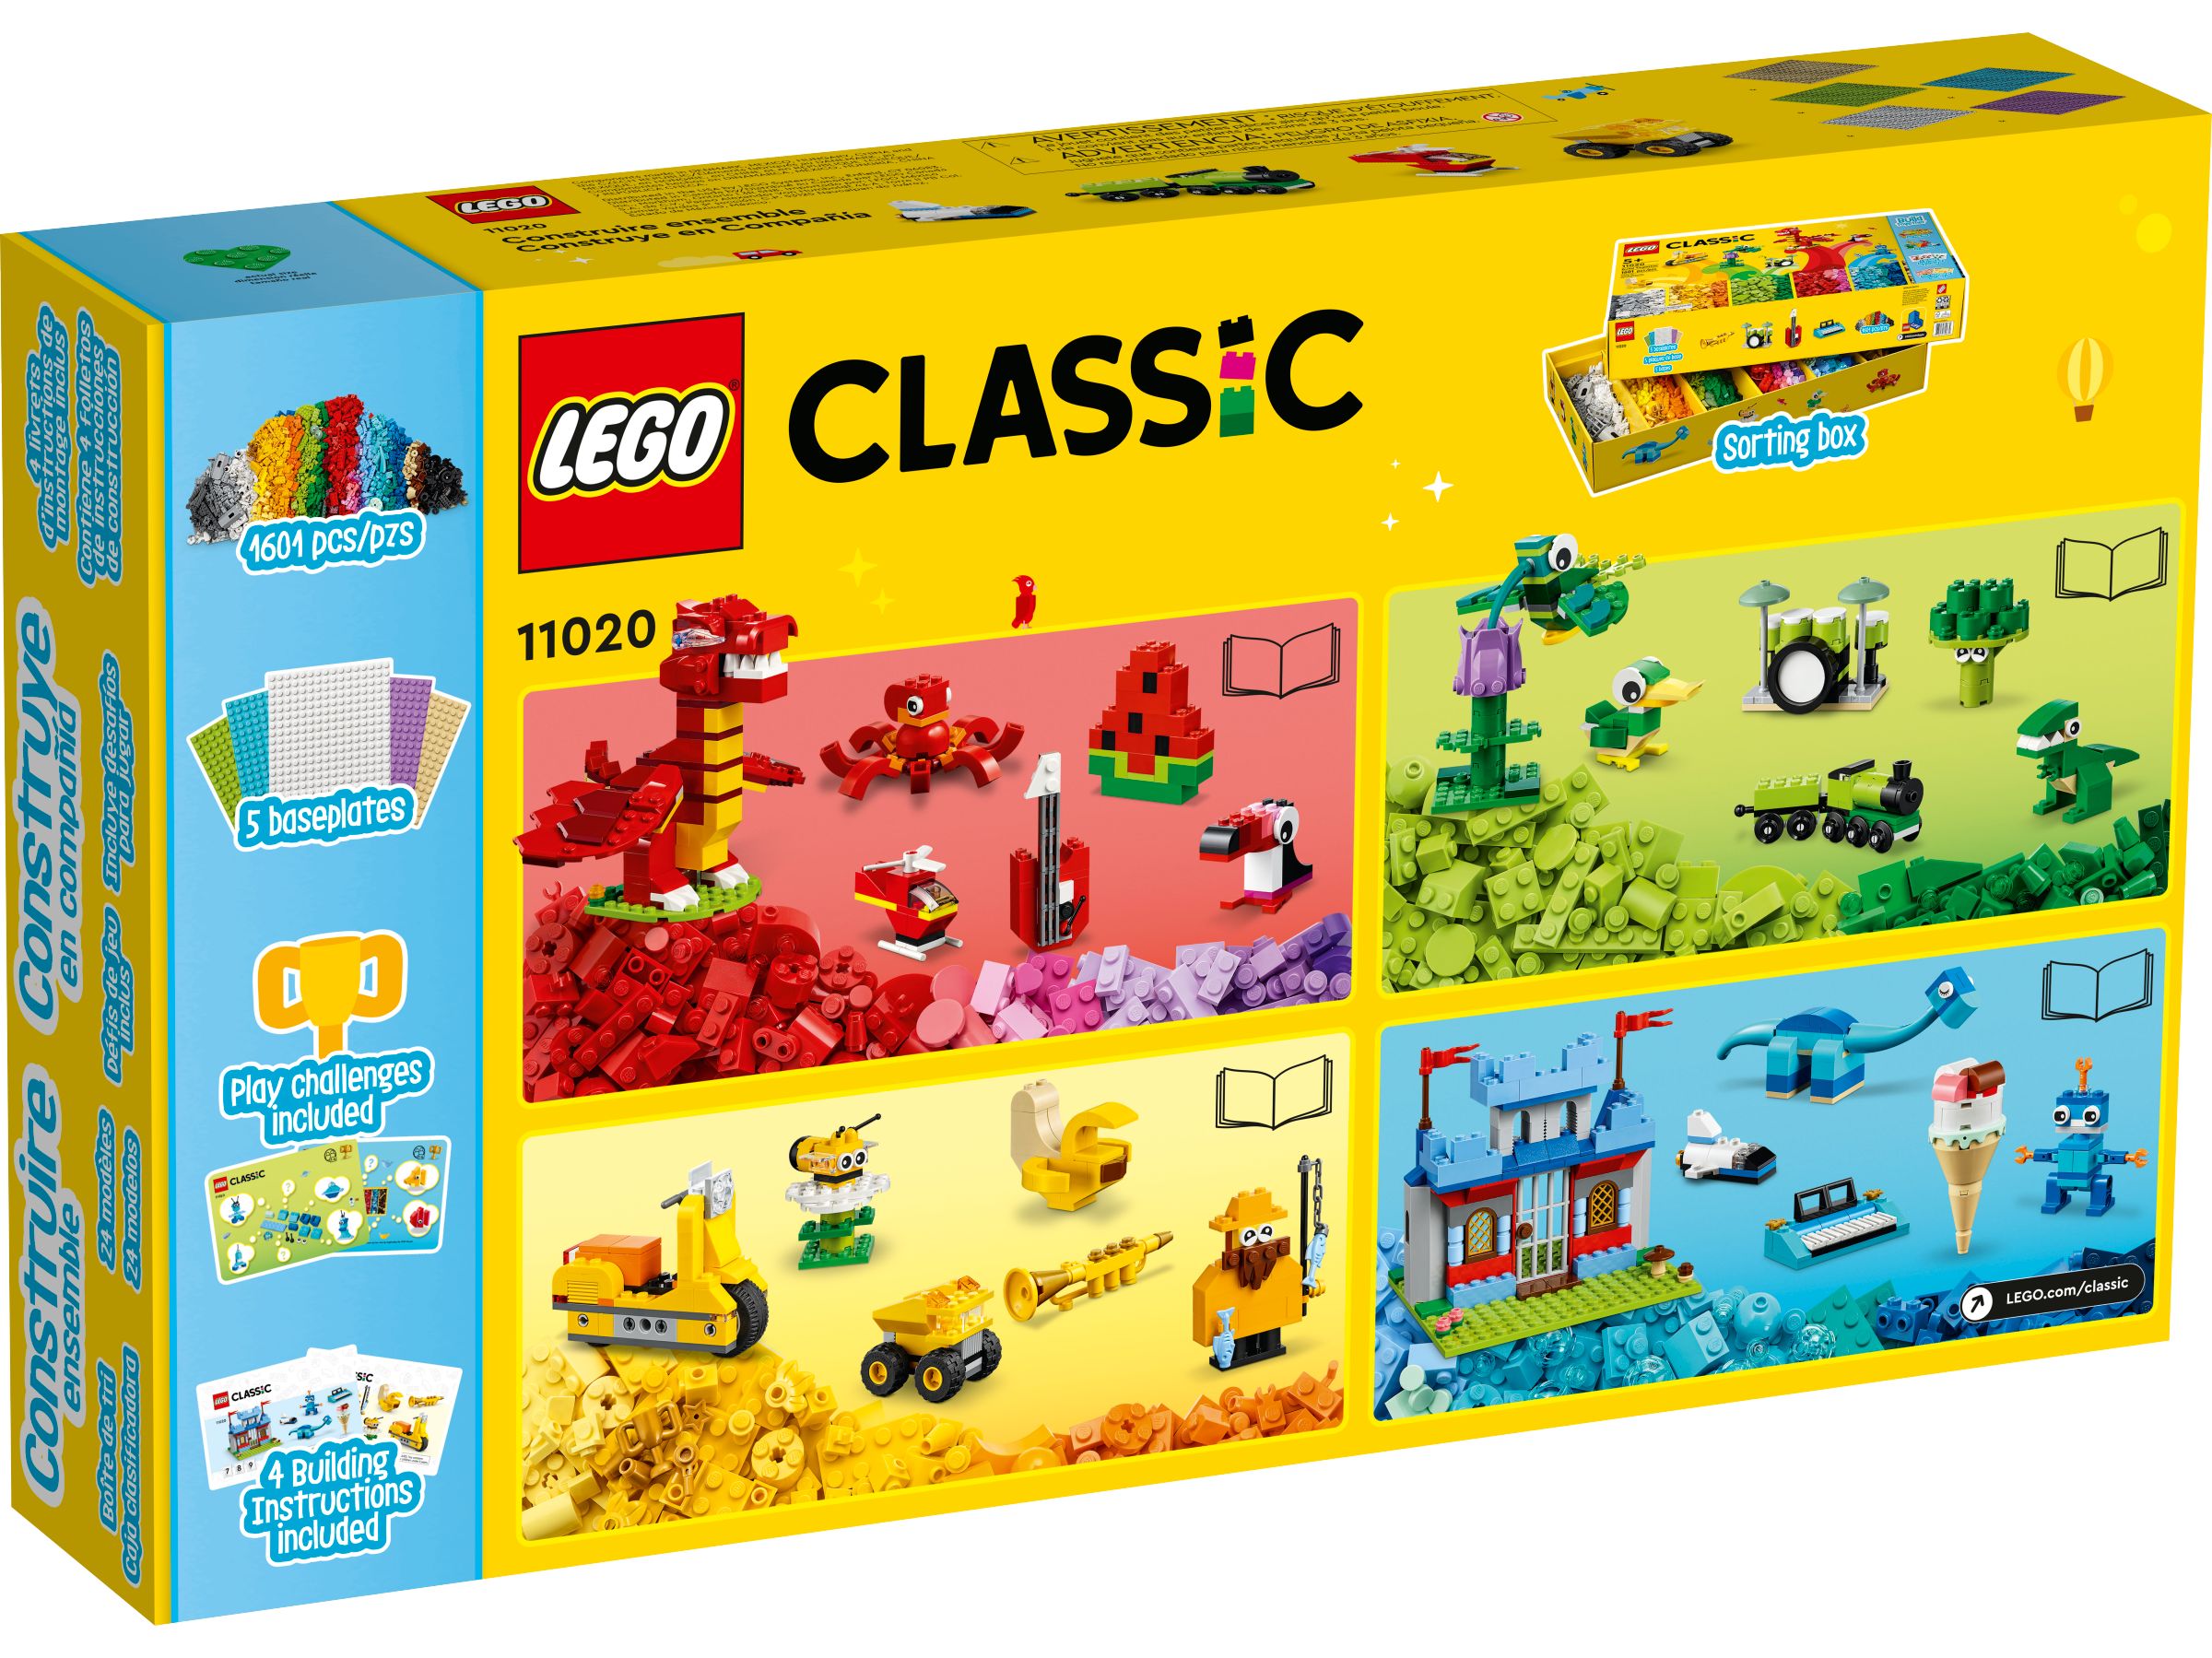 LEGO Classic 11020 Gemeinsam bauen LEGO_11020_alt7.jpg